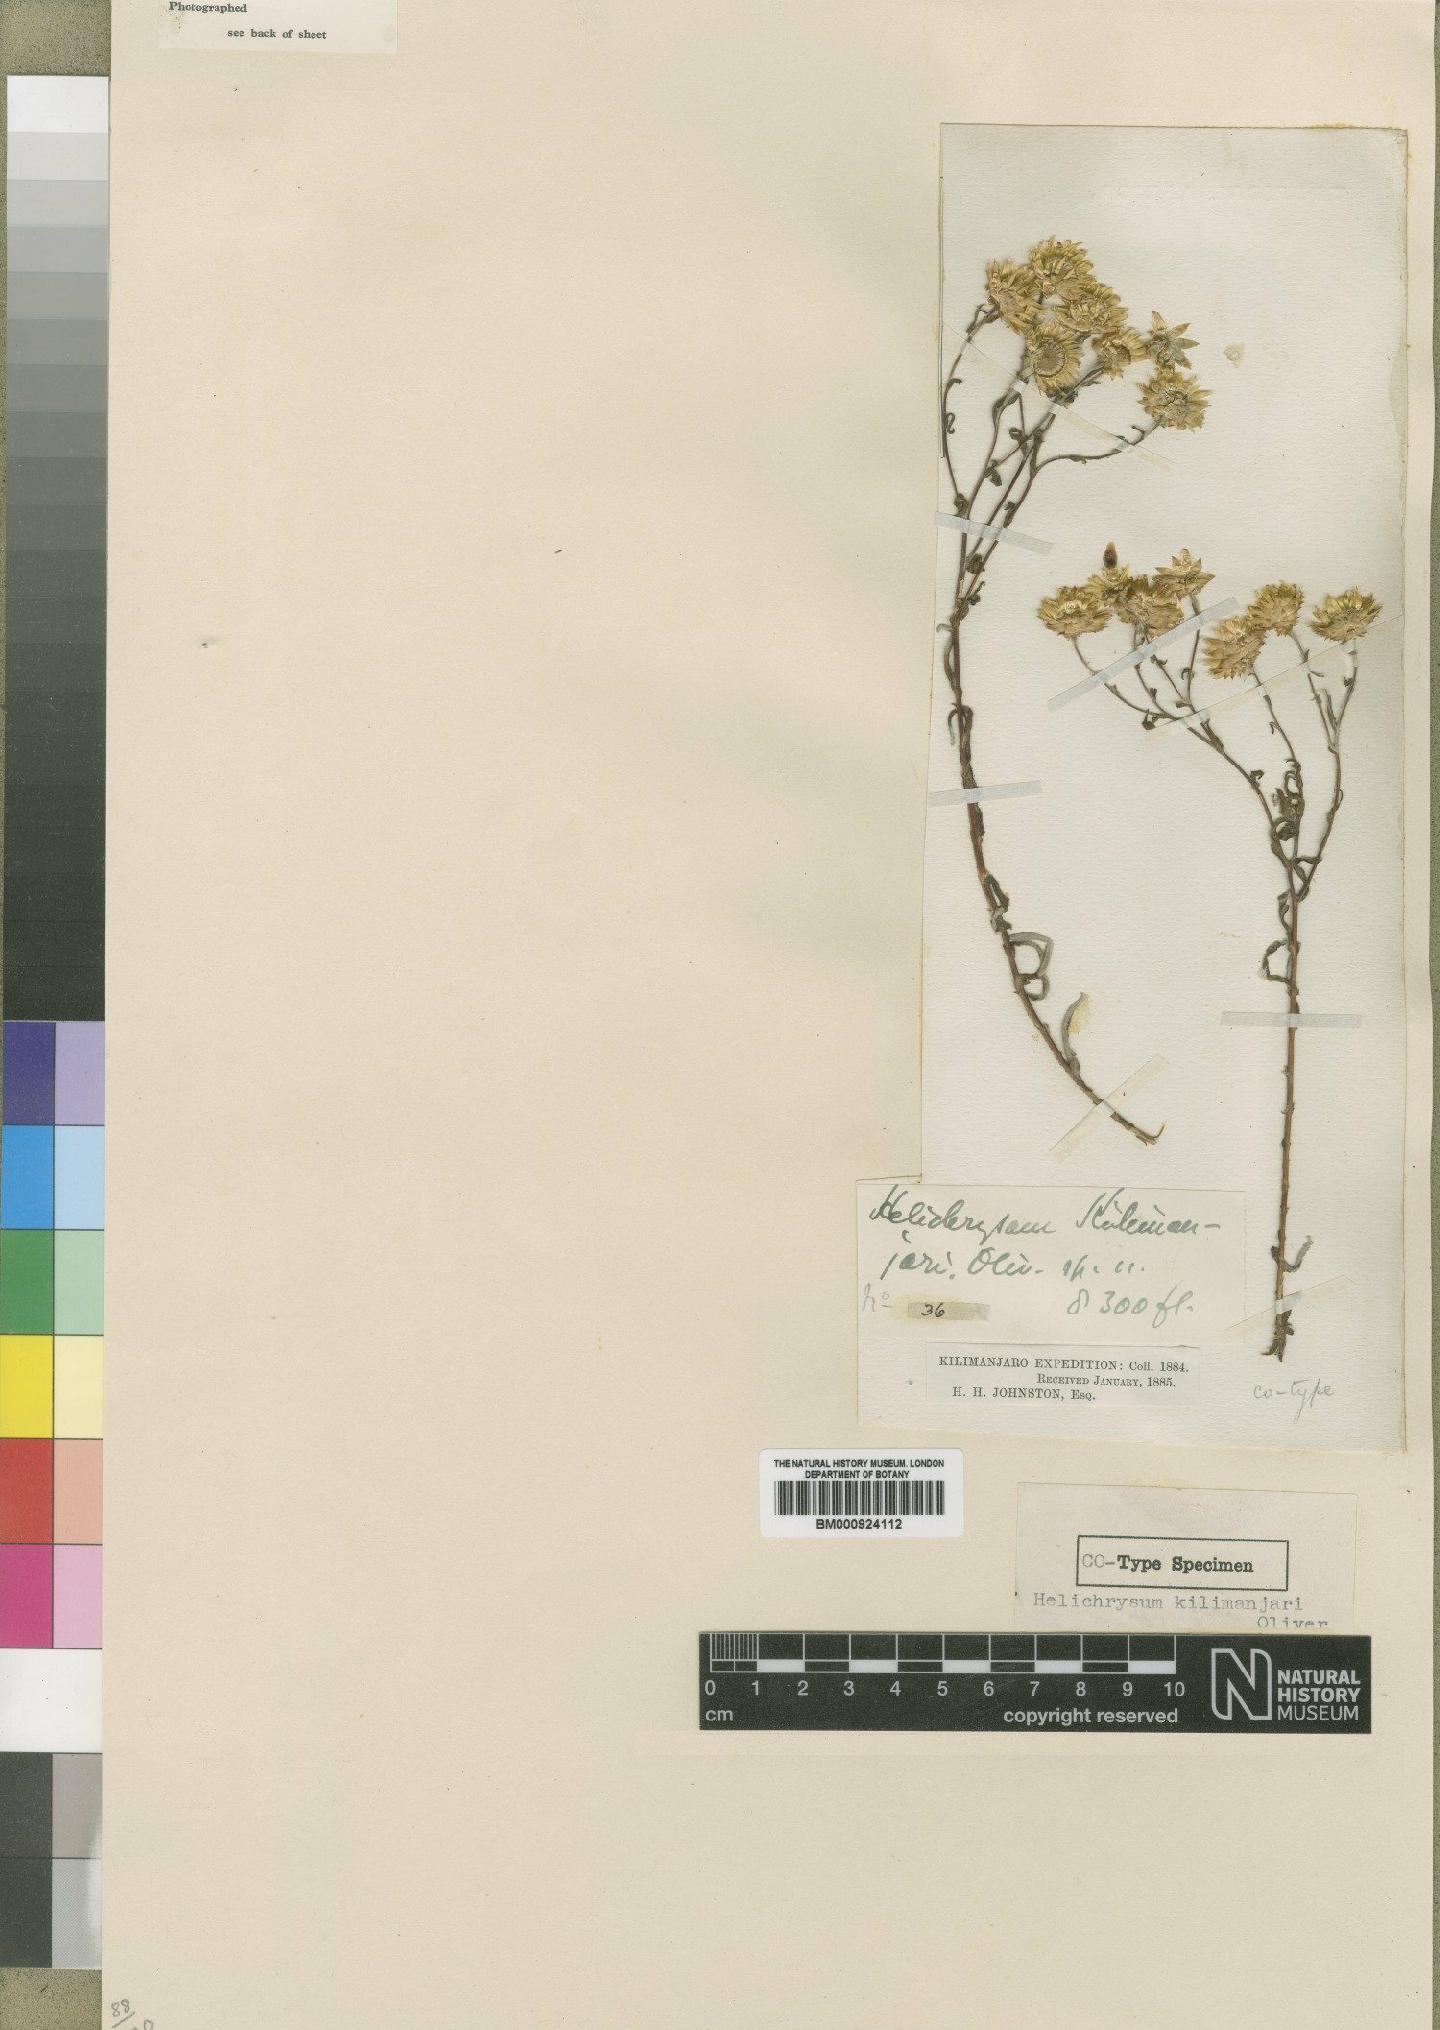 To NHMUK collection (Helichrysum kilimanjari Oliv.; TYPE; NHMUK:ecatalogue:4529140)